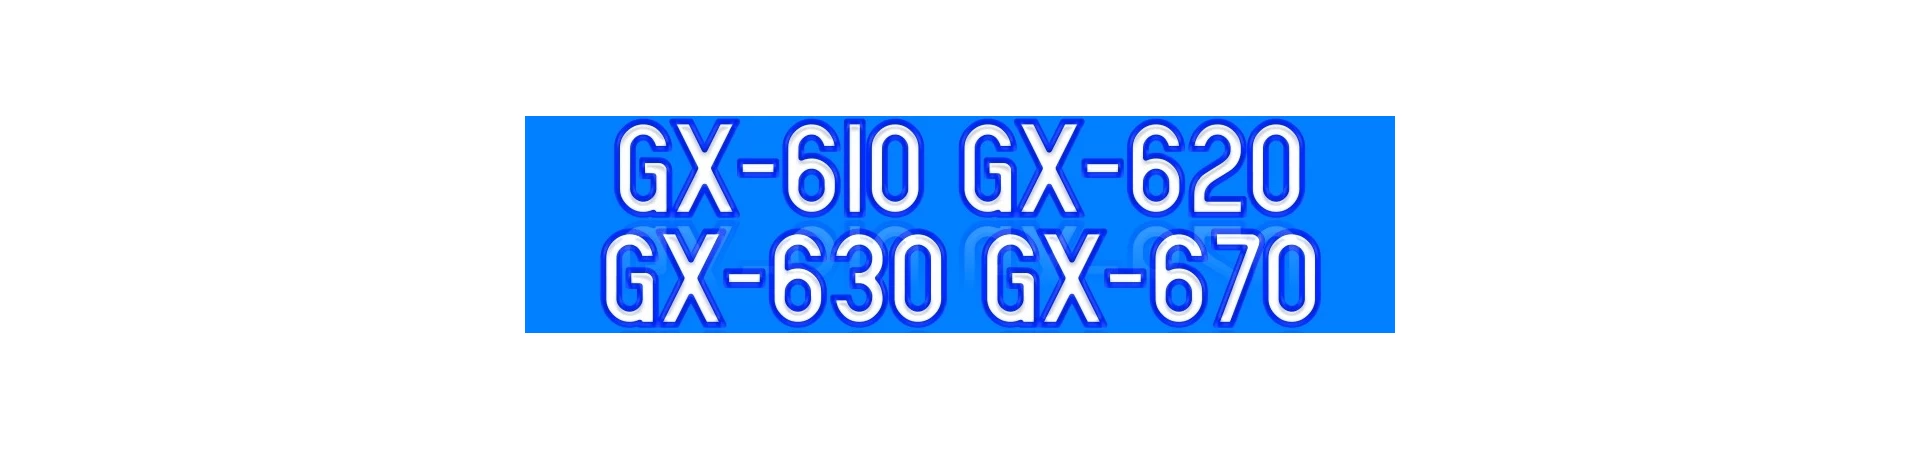 GX610 GX620 GX630 GX670